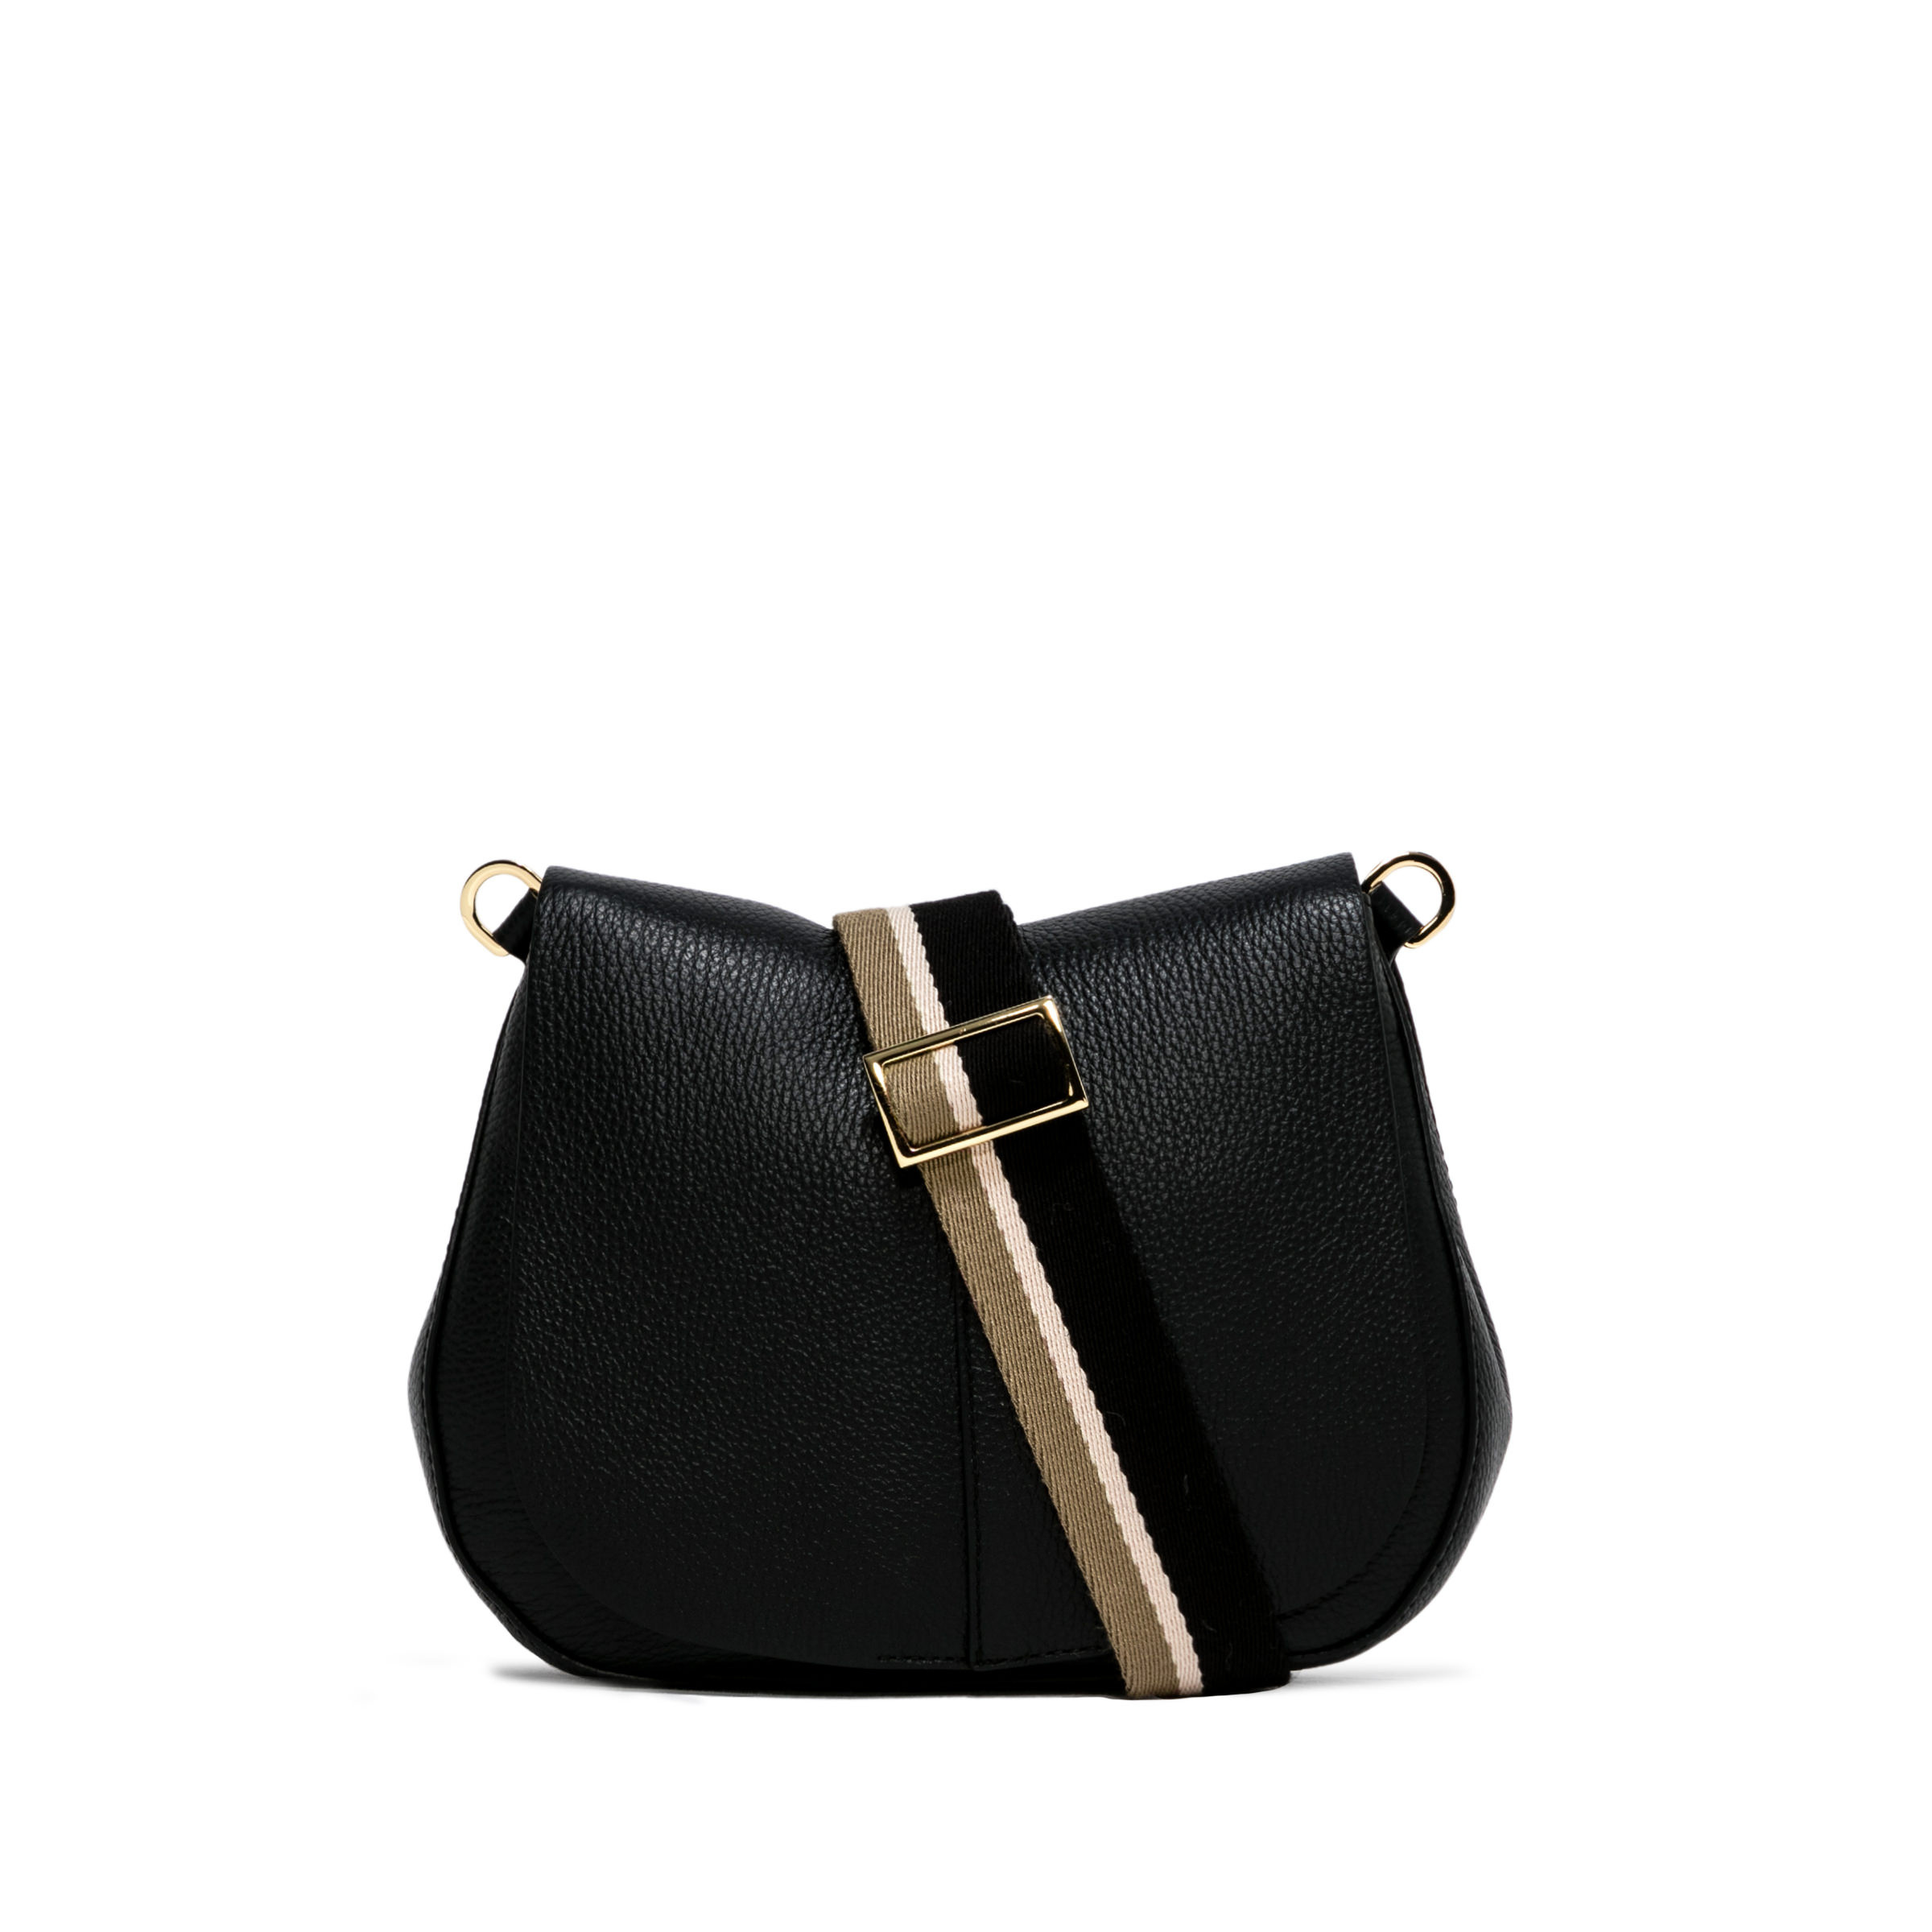 Gianni Chiarini - Helena Round bag in leather, Black, large image number 1